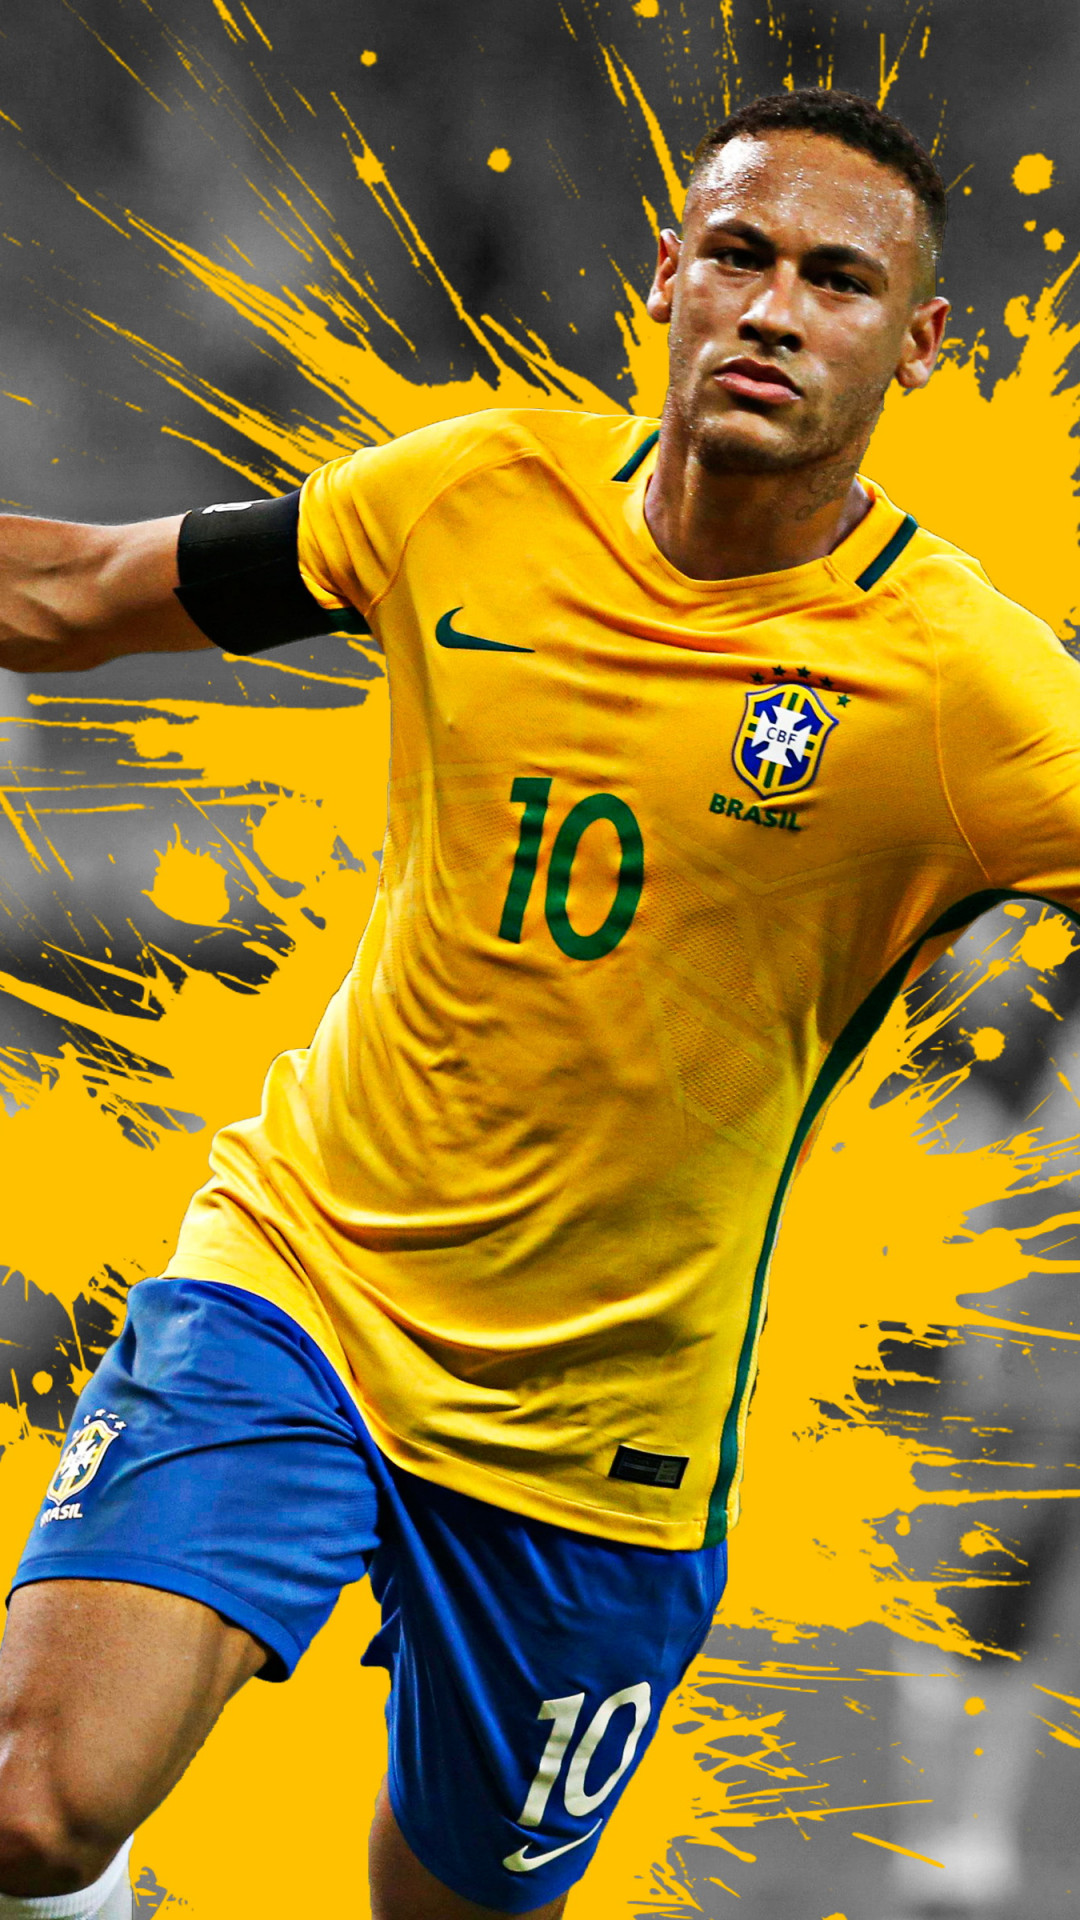 Download wallpaper: Neymar for Brazil national team 1080x1920